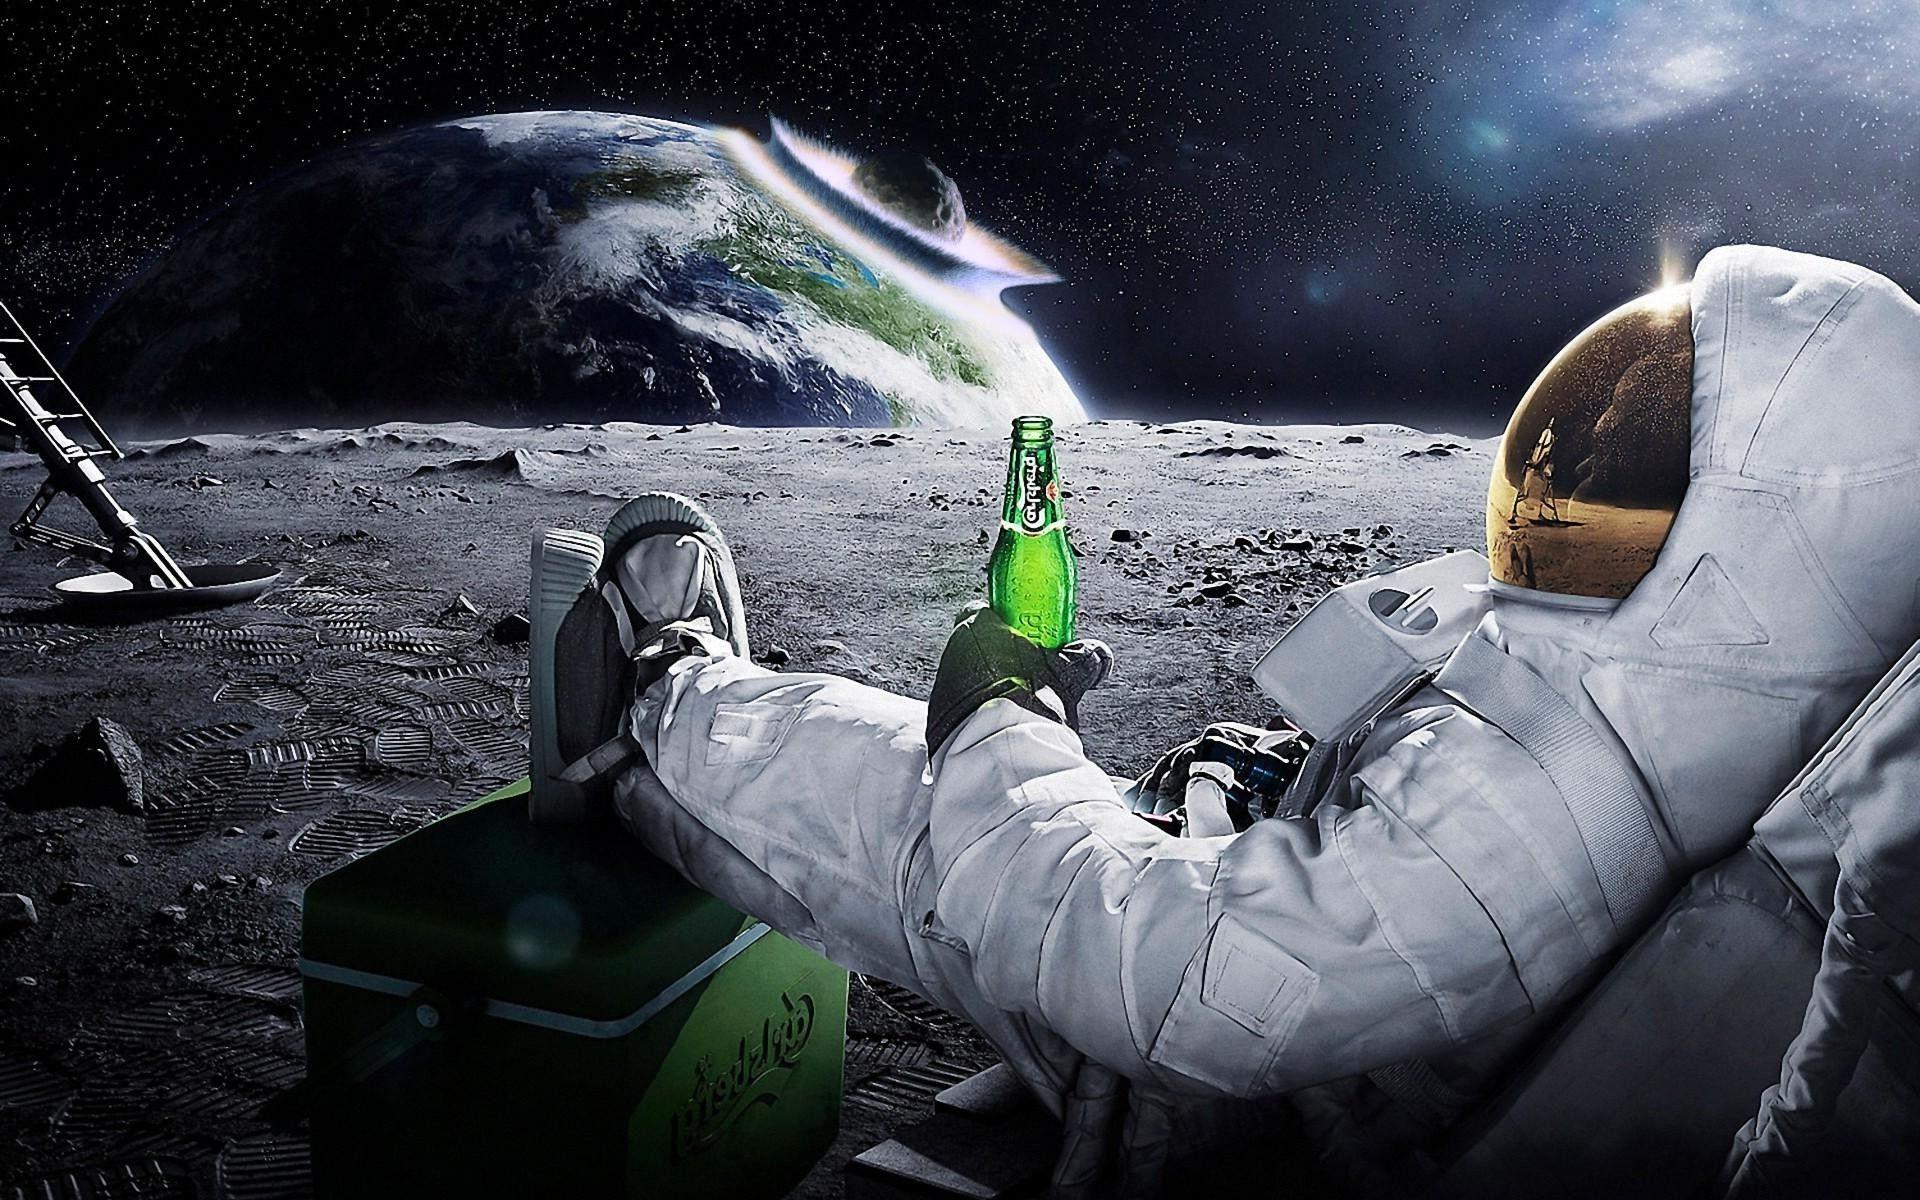 Wallpaper, 1920x1200 px, astronaut, beer, Carlsberg, Earth, meteors